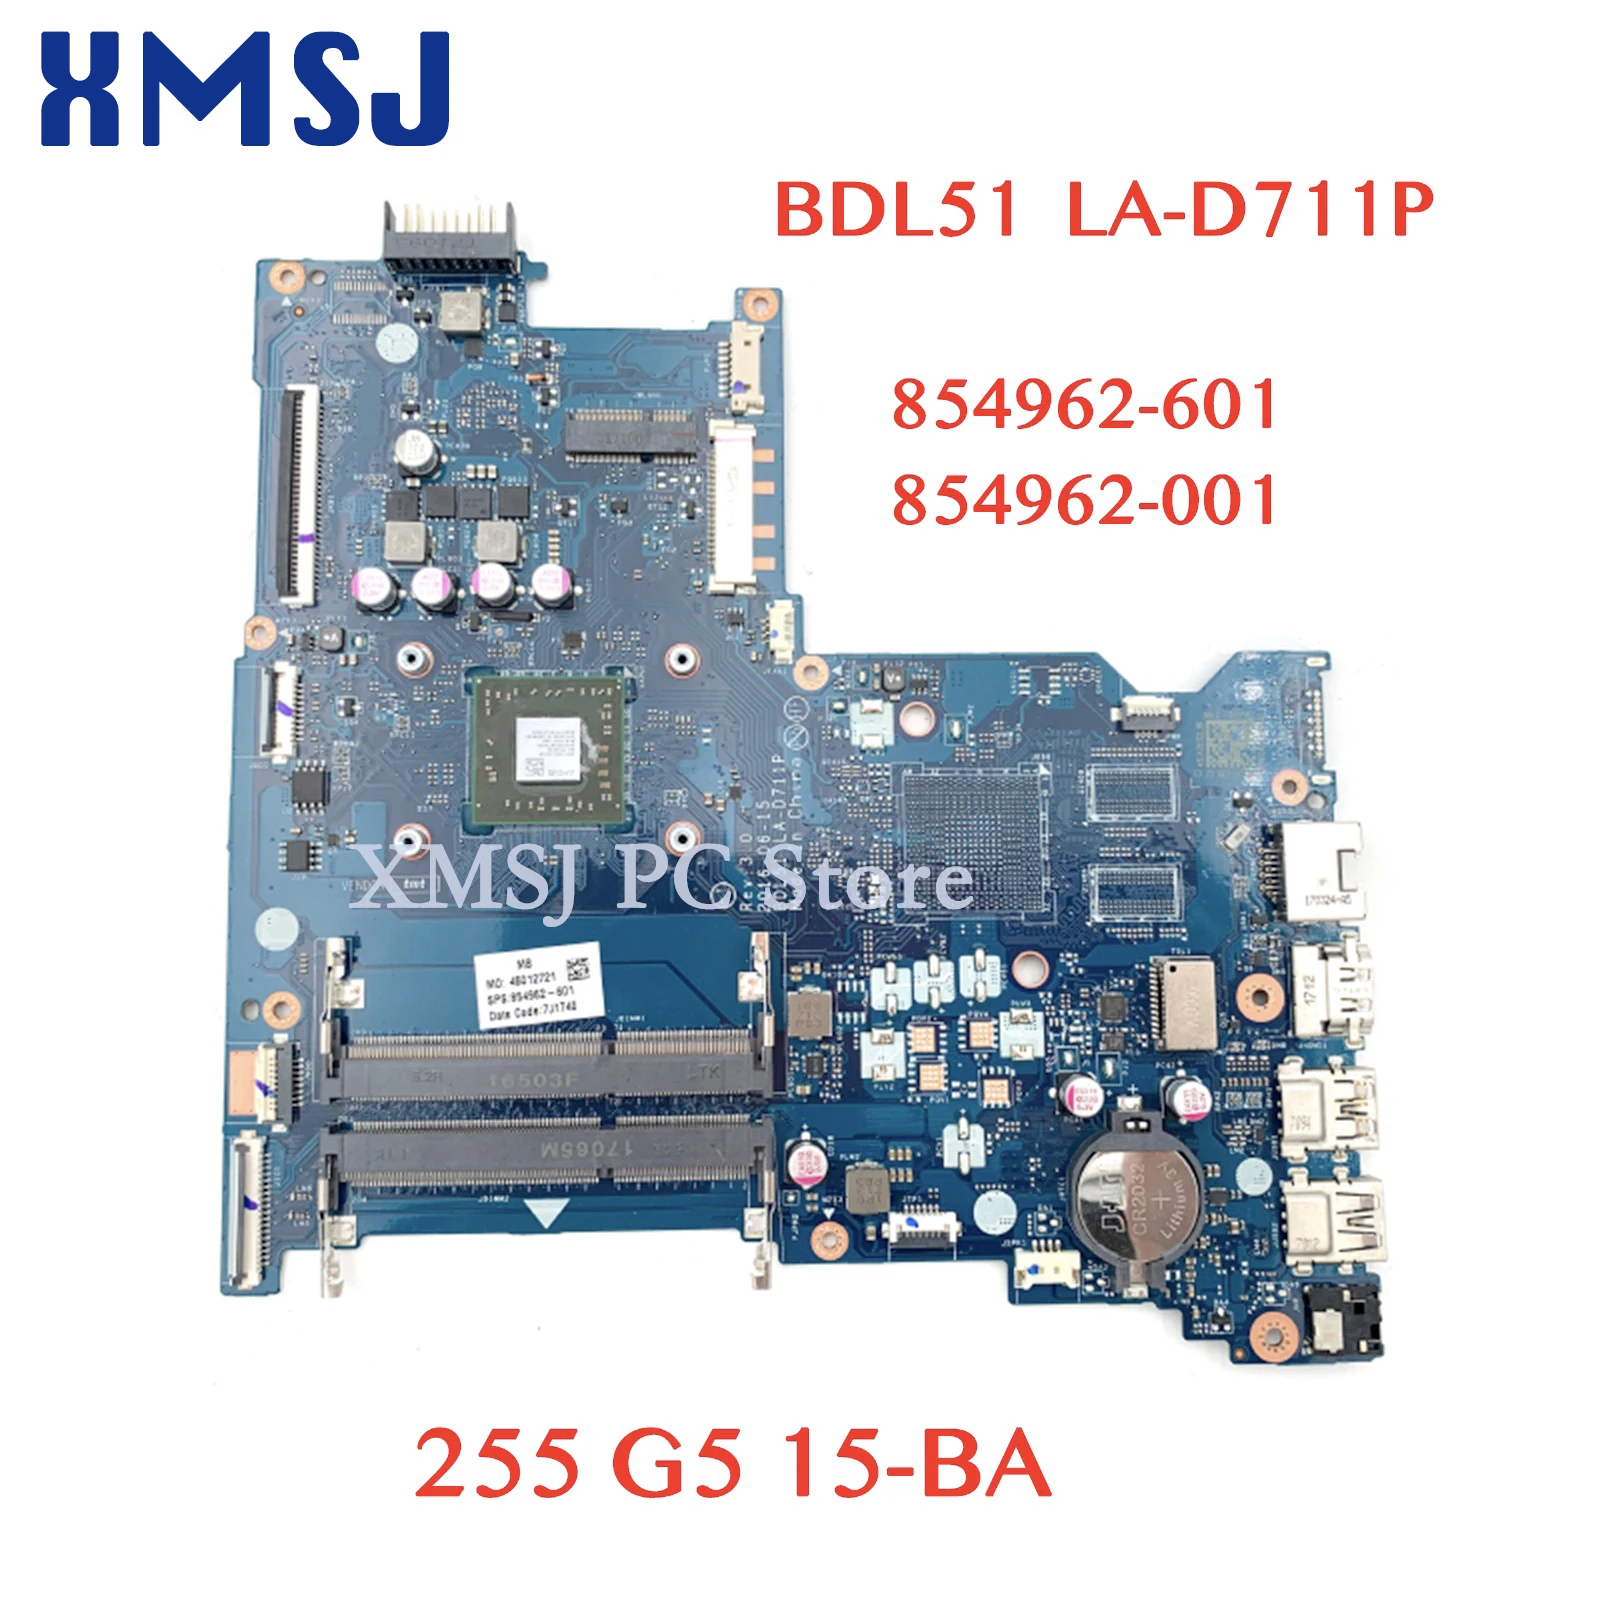 XMSJ BDL51 LA-D711P 854962-601 854962-001 Laptop Motherboard for HP 255 G5 15-BA DDR3 Main board 1 order